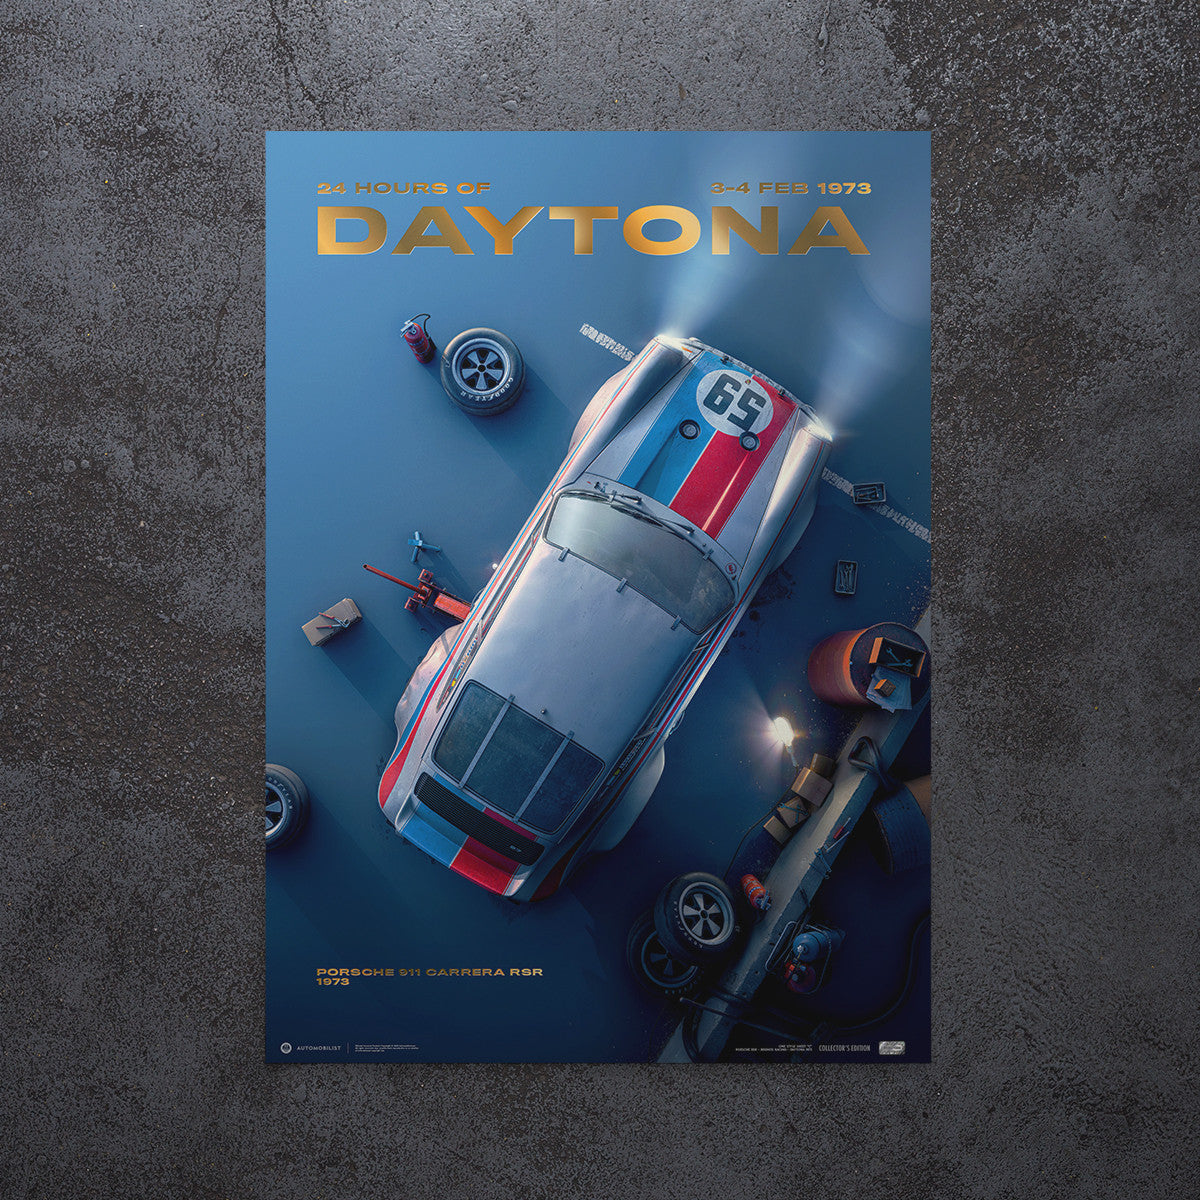 Poster | Porsche 911 Carrera RSR - 24 Hours of Daytona - 1973 | Collector's Edition